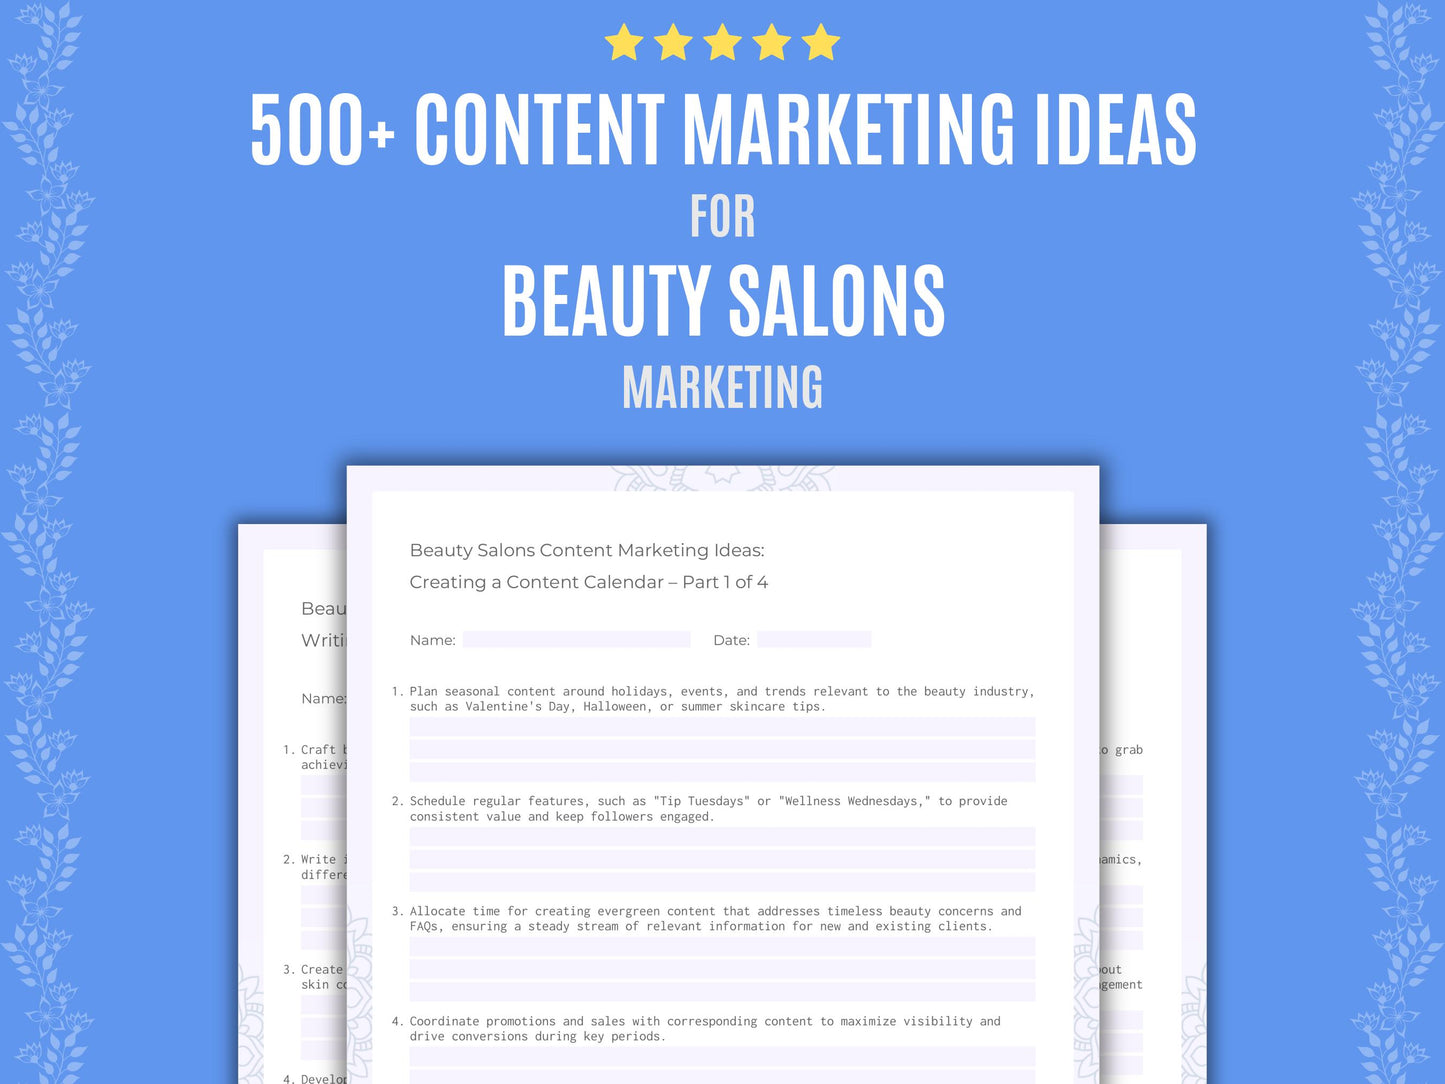 Beauty Salons Content Marketing Ideas Resource